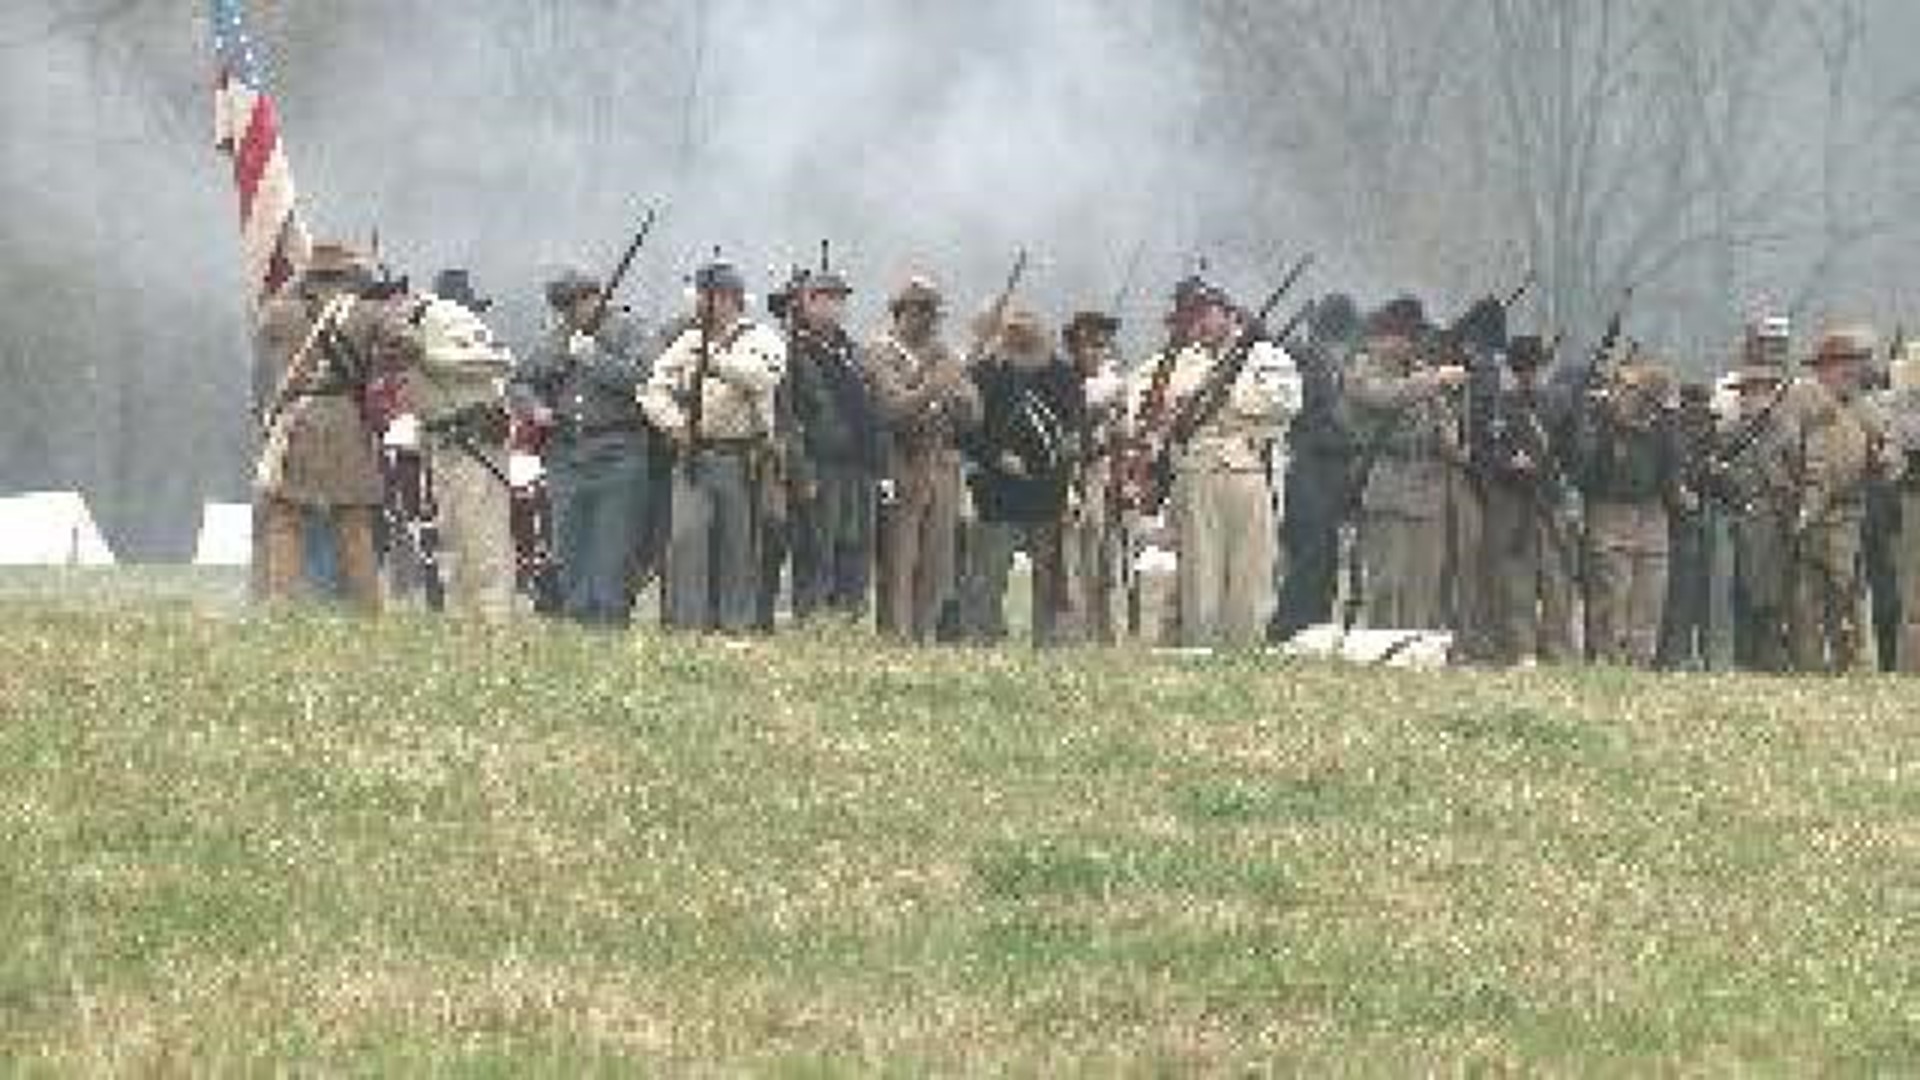 151 Year Anniversary of the Battle of Pea Ridge